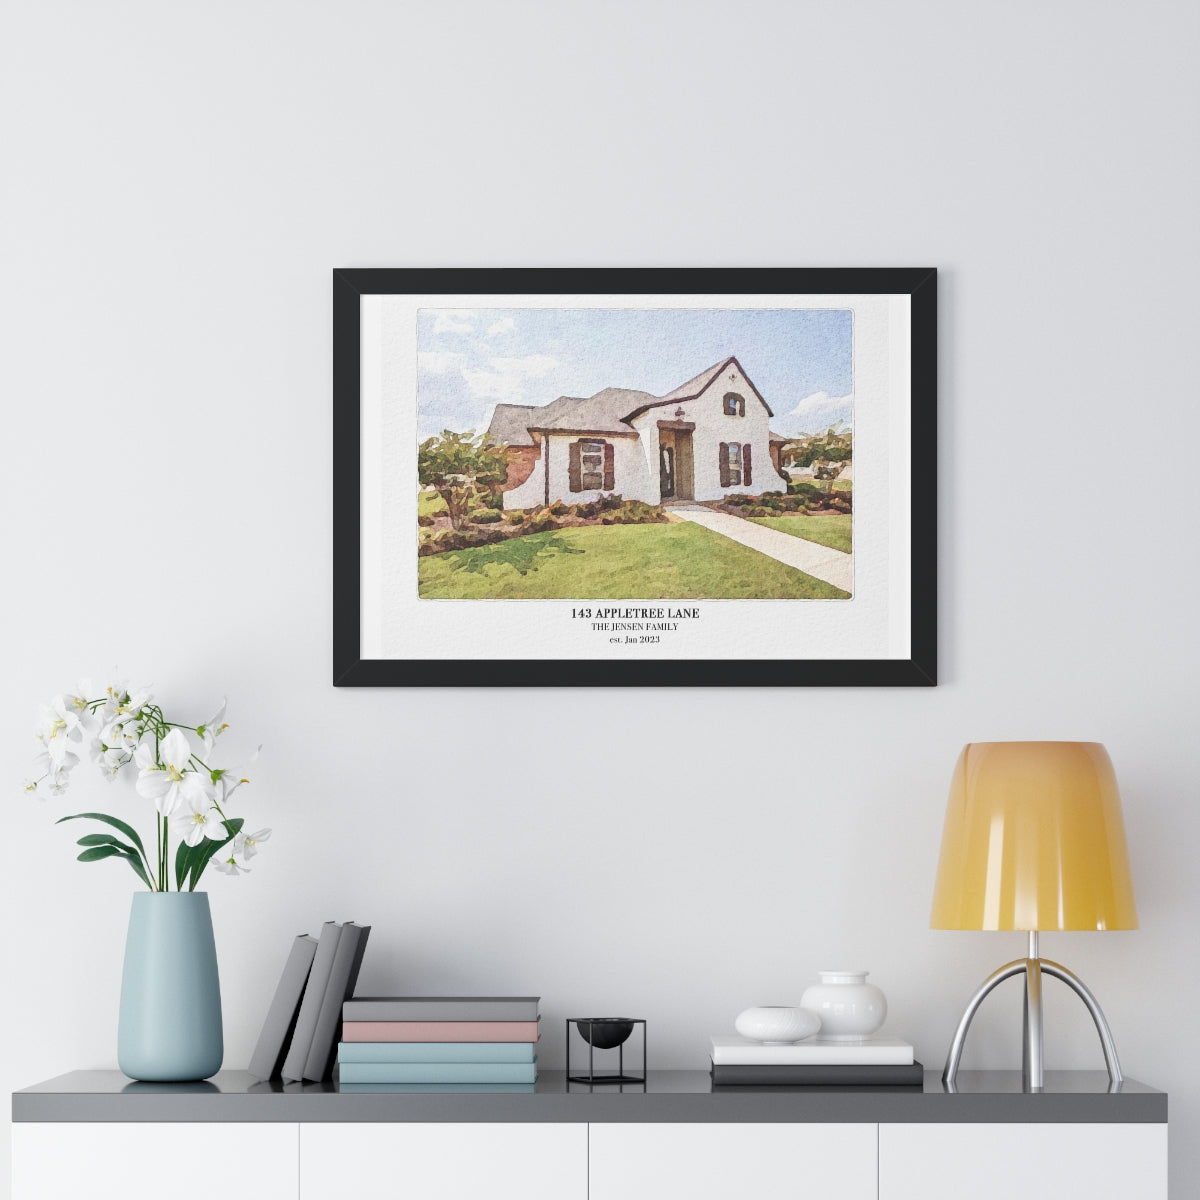 Framed Custom Home Portrait - Watercolor Effect